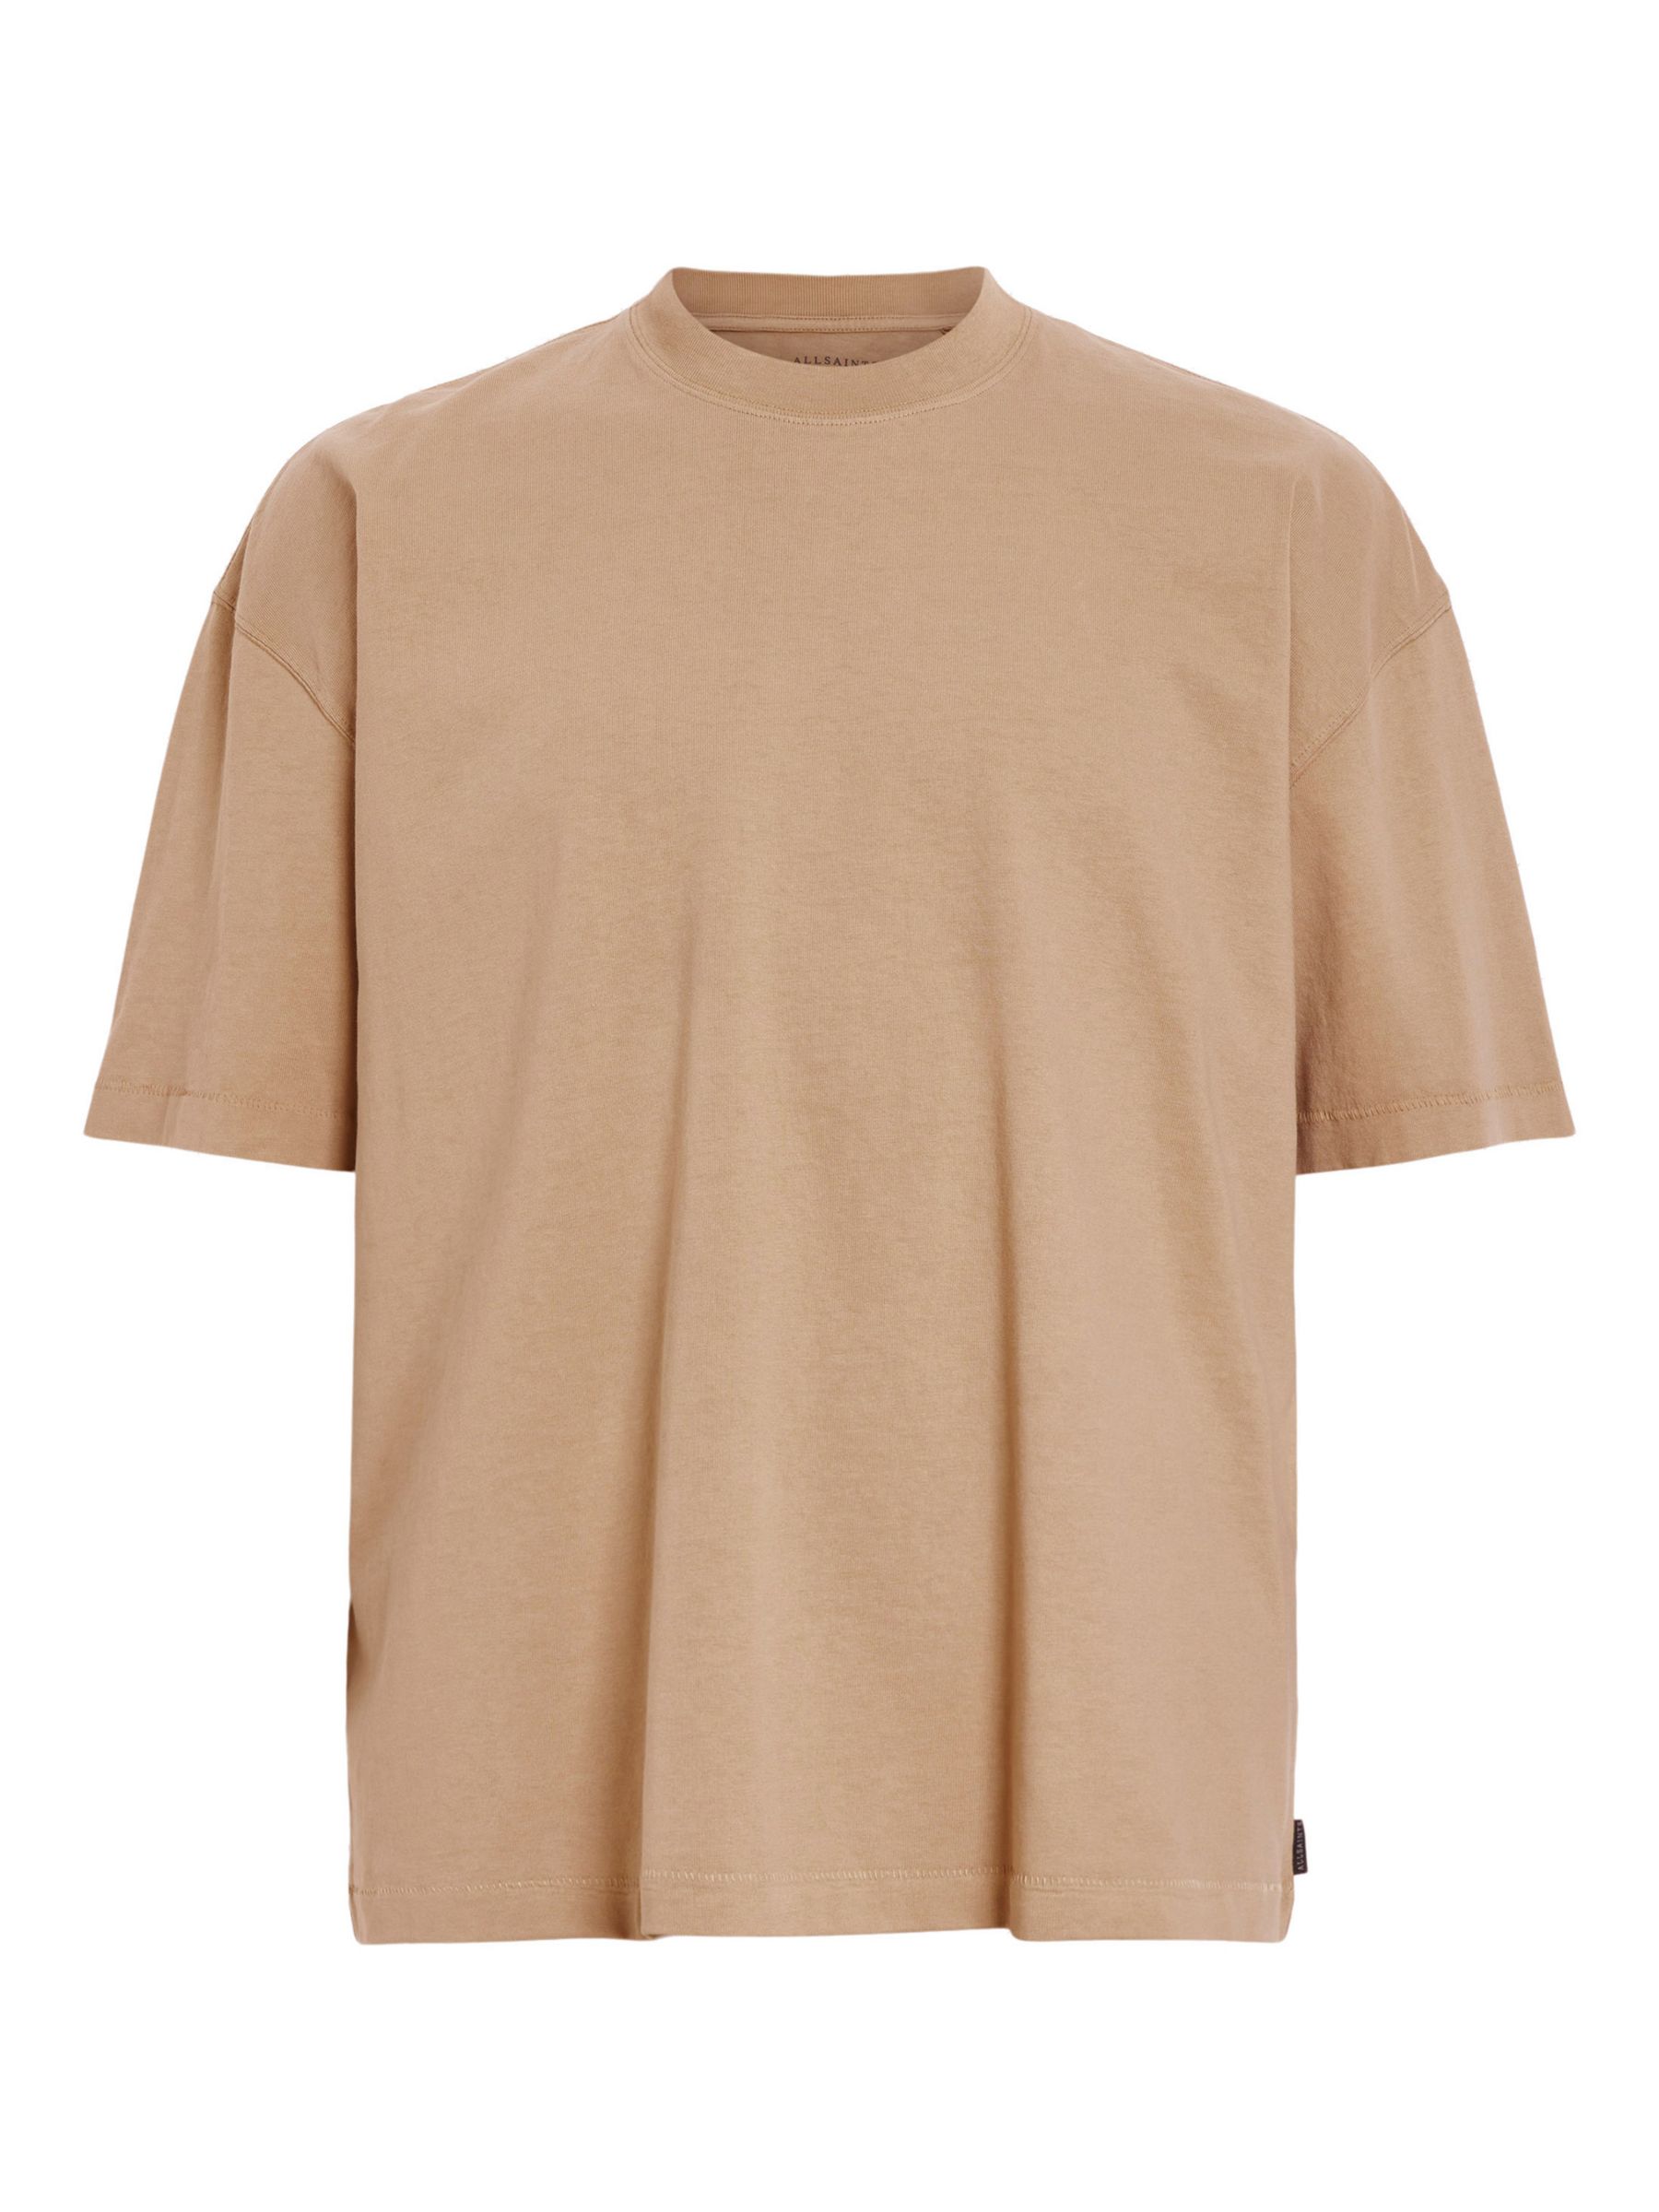 Buy AllSaints Jase Short Sleeve Crew T-Shirt, Moorland Brown Online at johnlewis.com